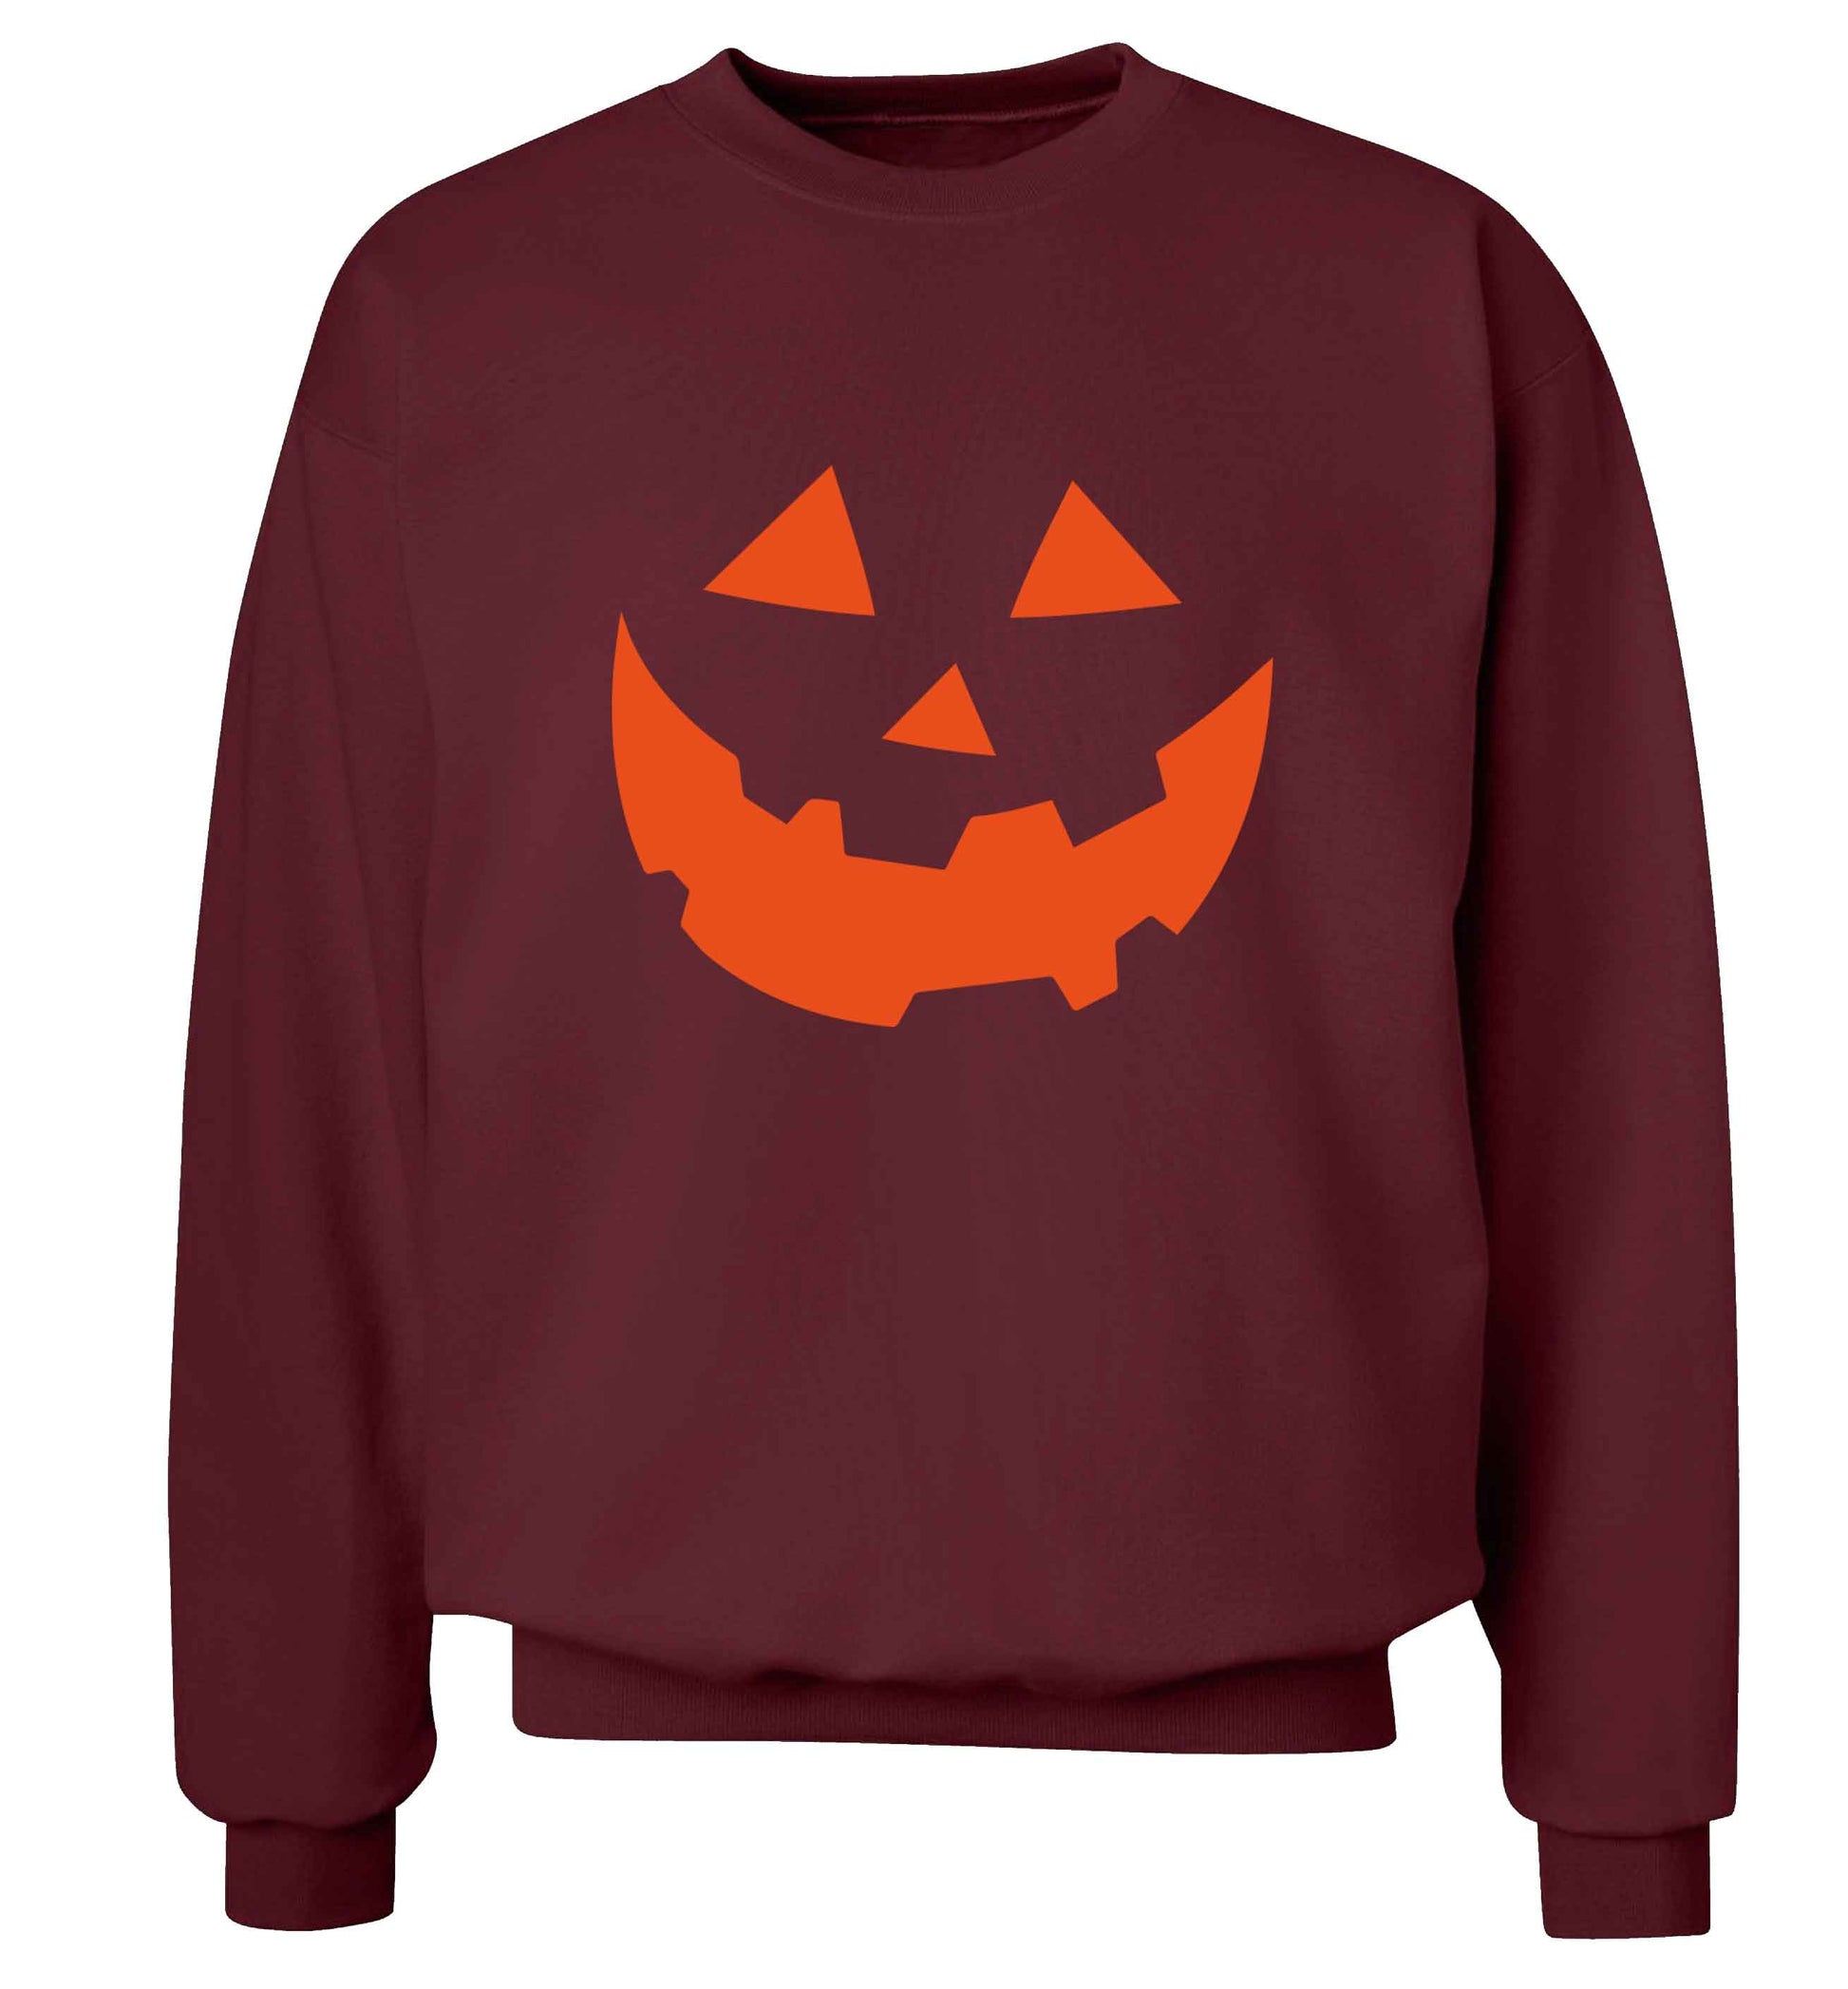 Pumpkin Spice Nice adult's unisex maroon sweater 2XL